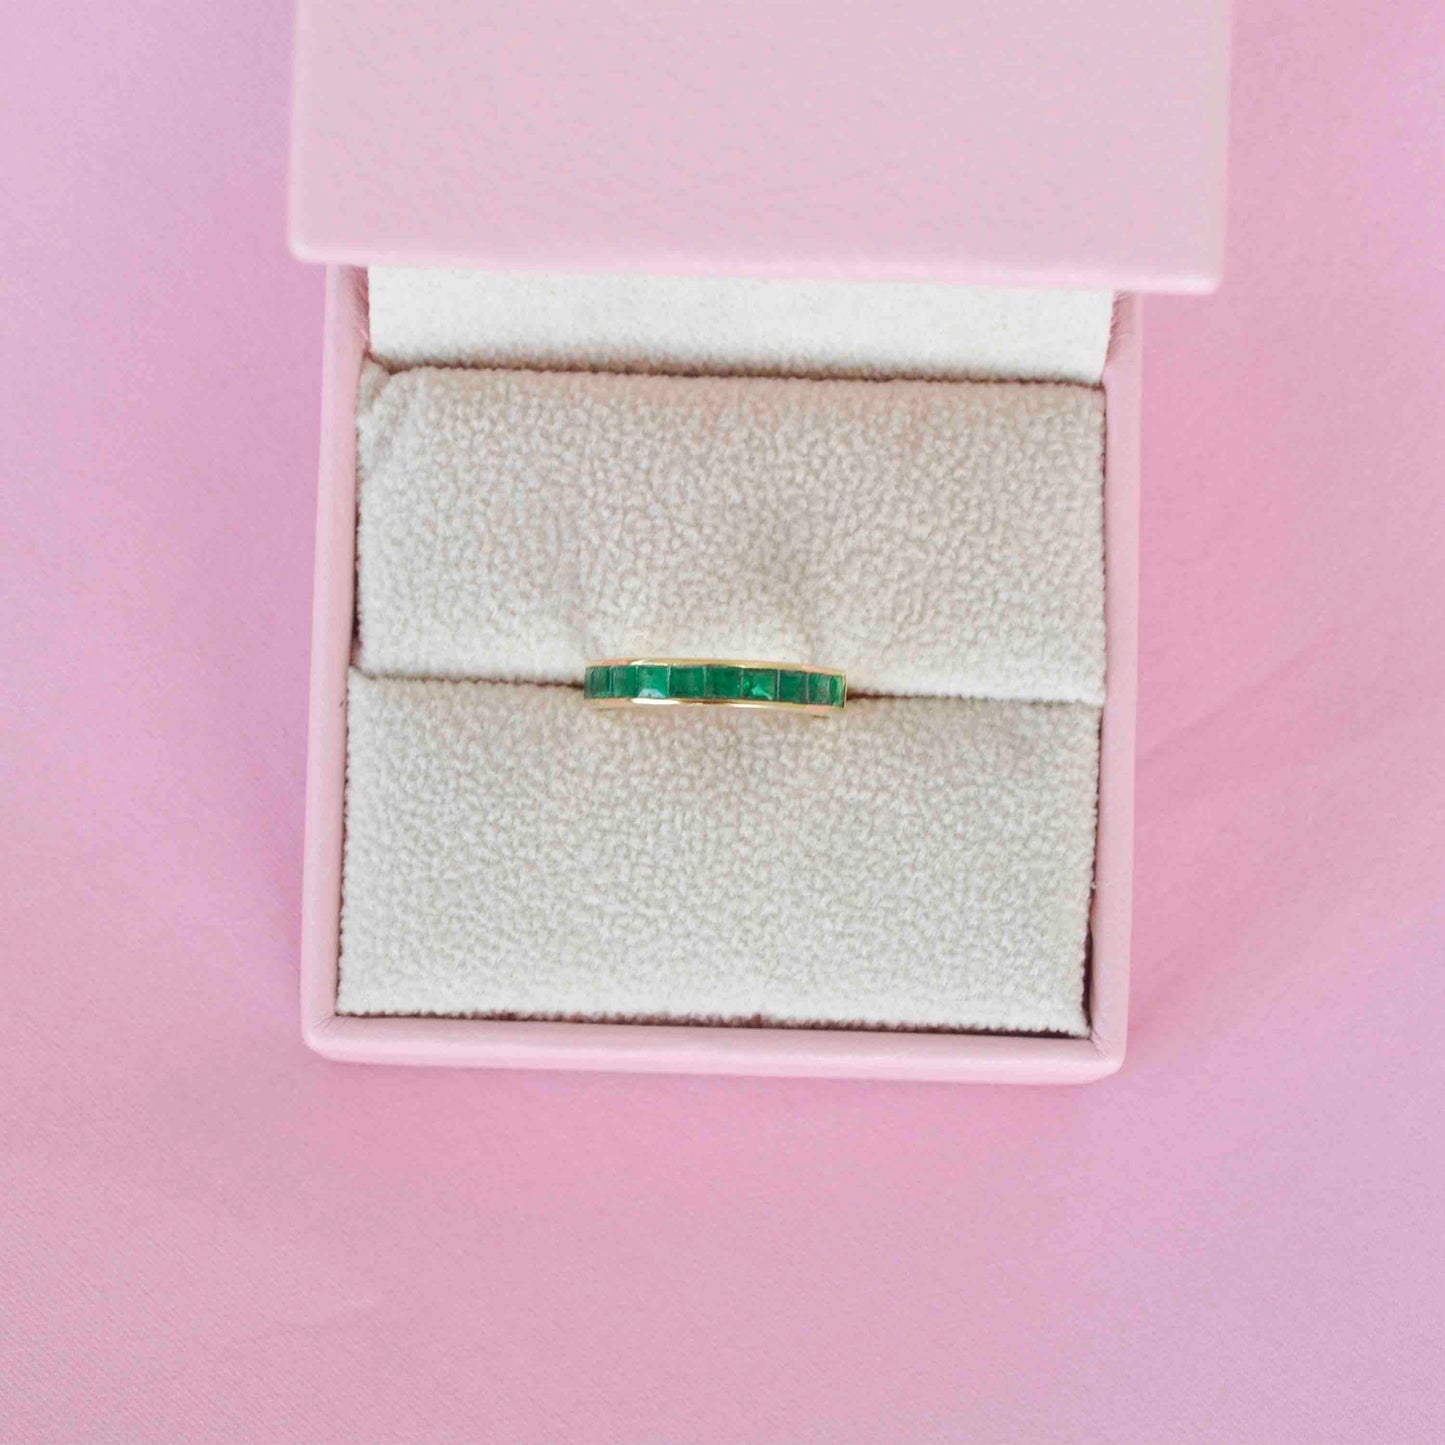 band emerald cut diamond ring